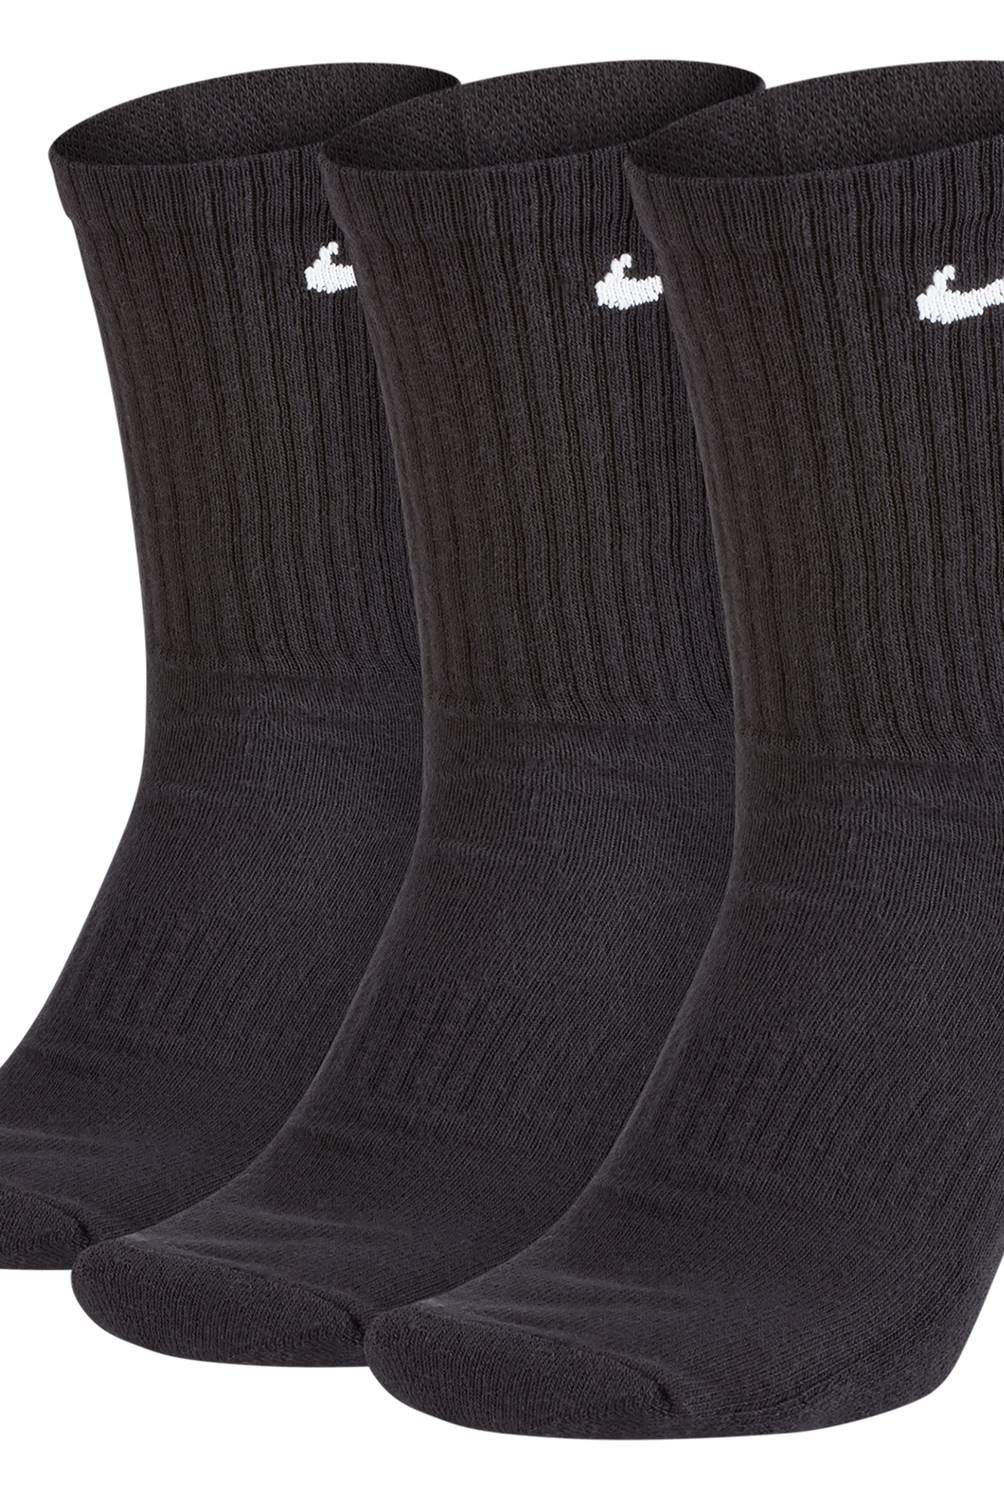 NIKE - Pack De 3 Calcetines Largos Deportivos Hombre Nike